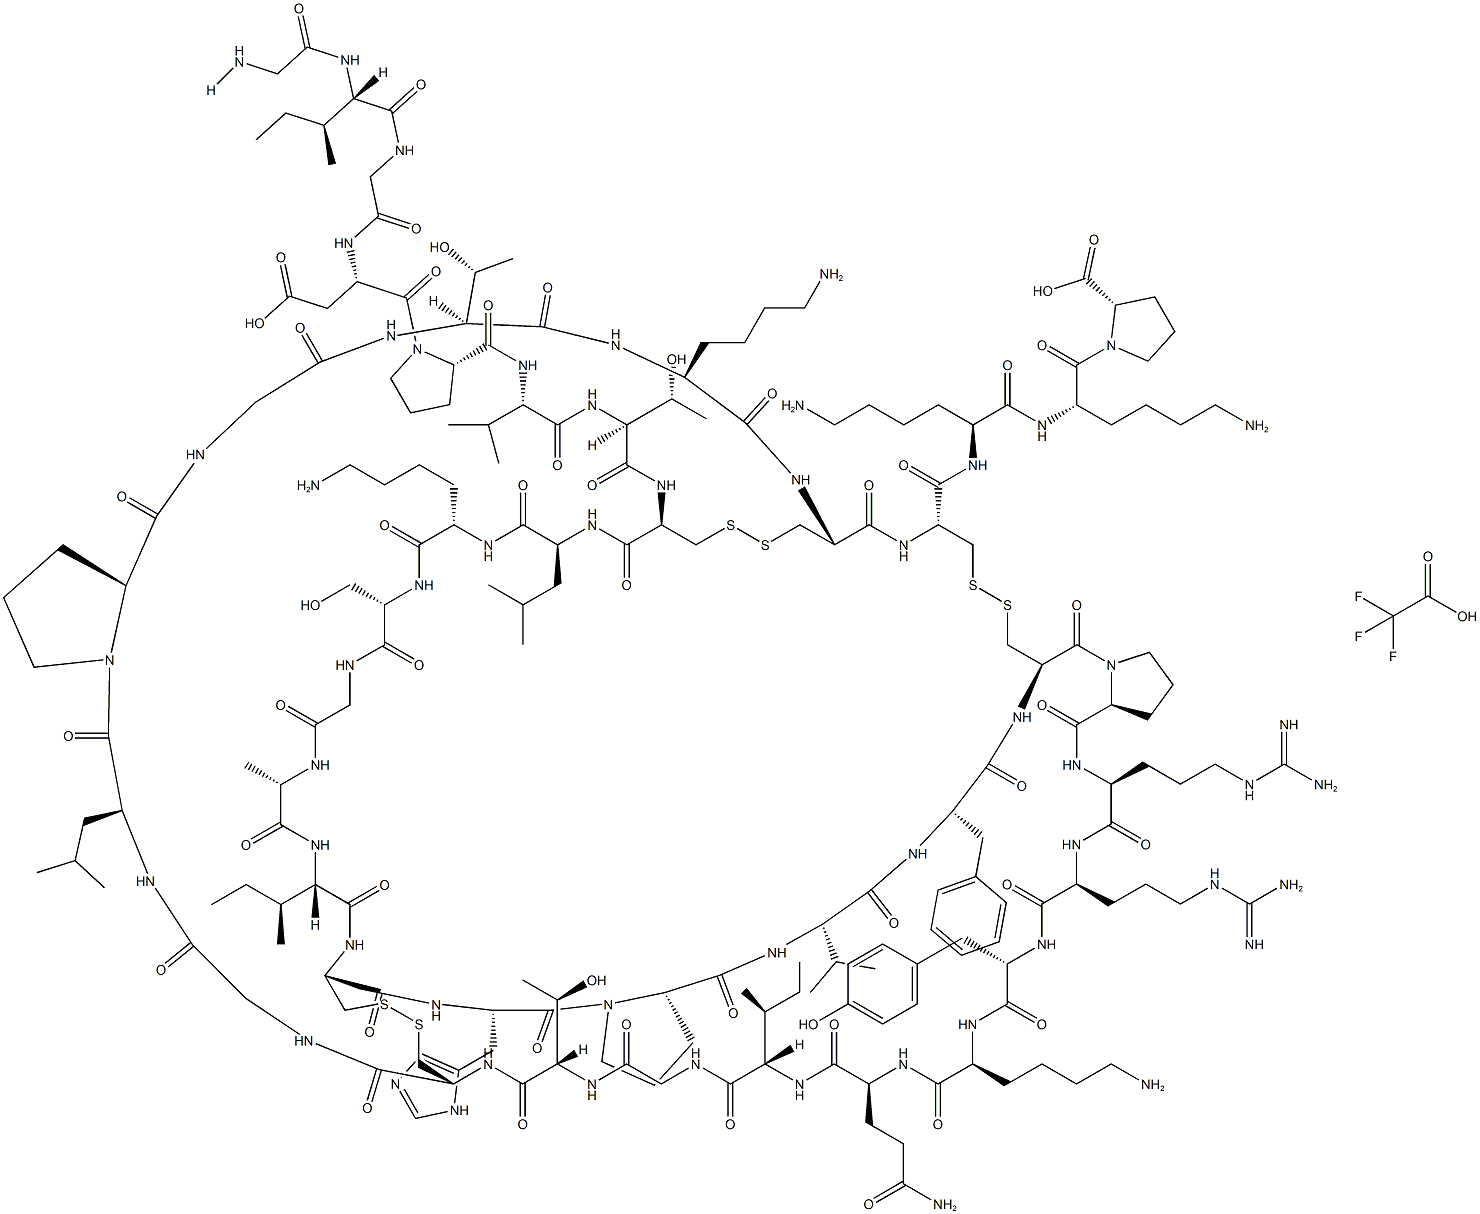 372146-20-8 -Defensin-2 (human) (trifluoroacetate salt)